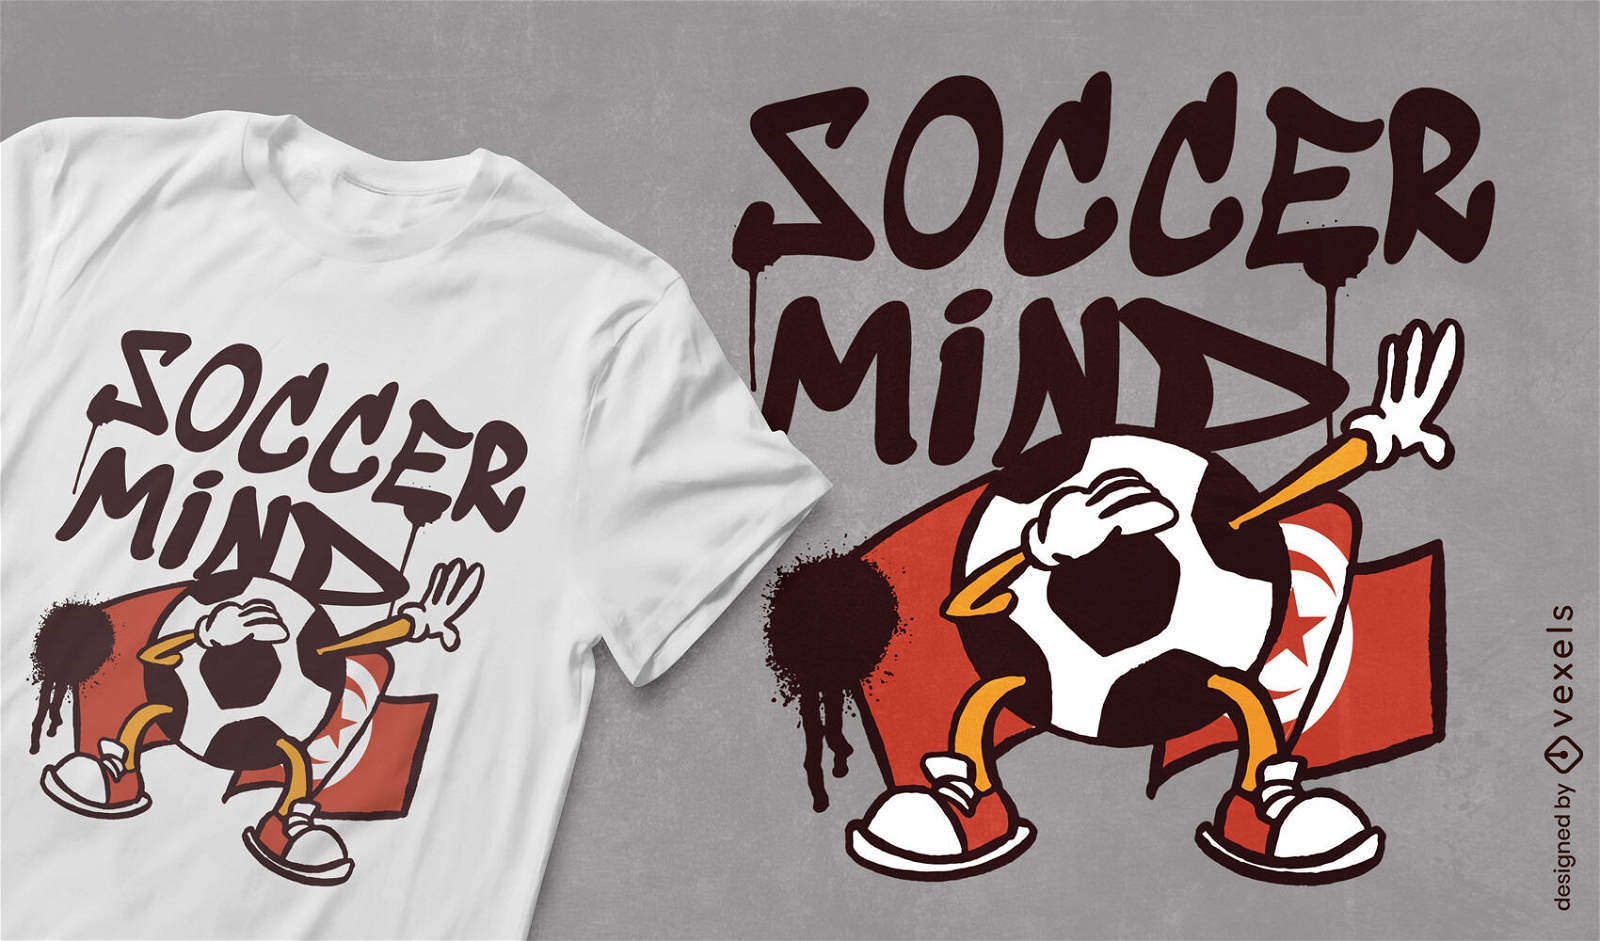 Tunisia soccer ball cartoon t-shirt design